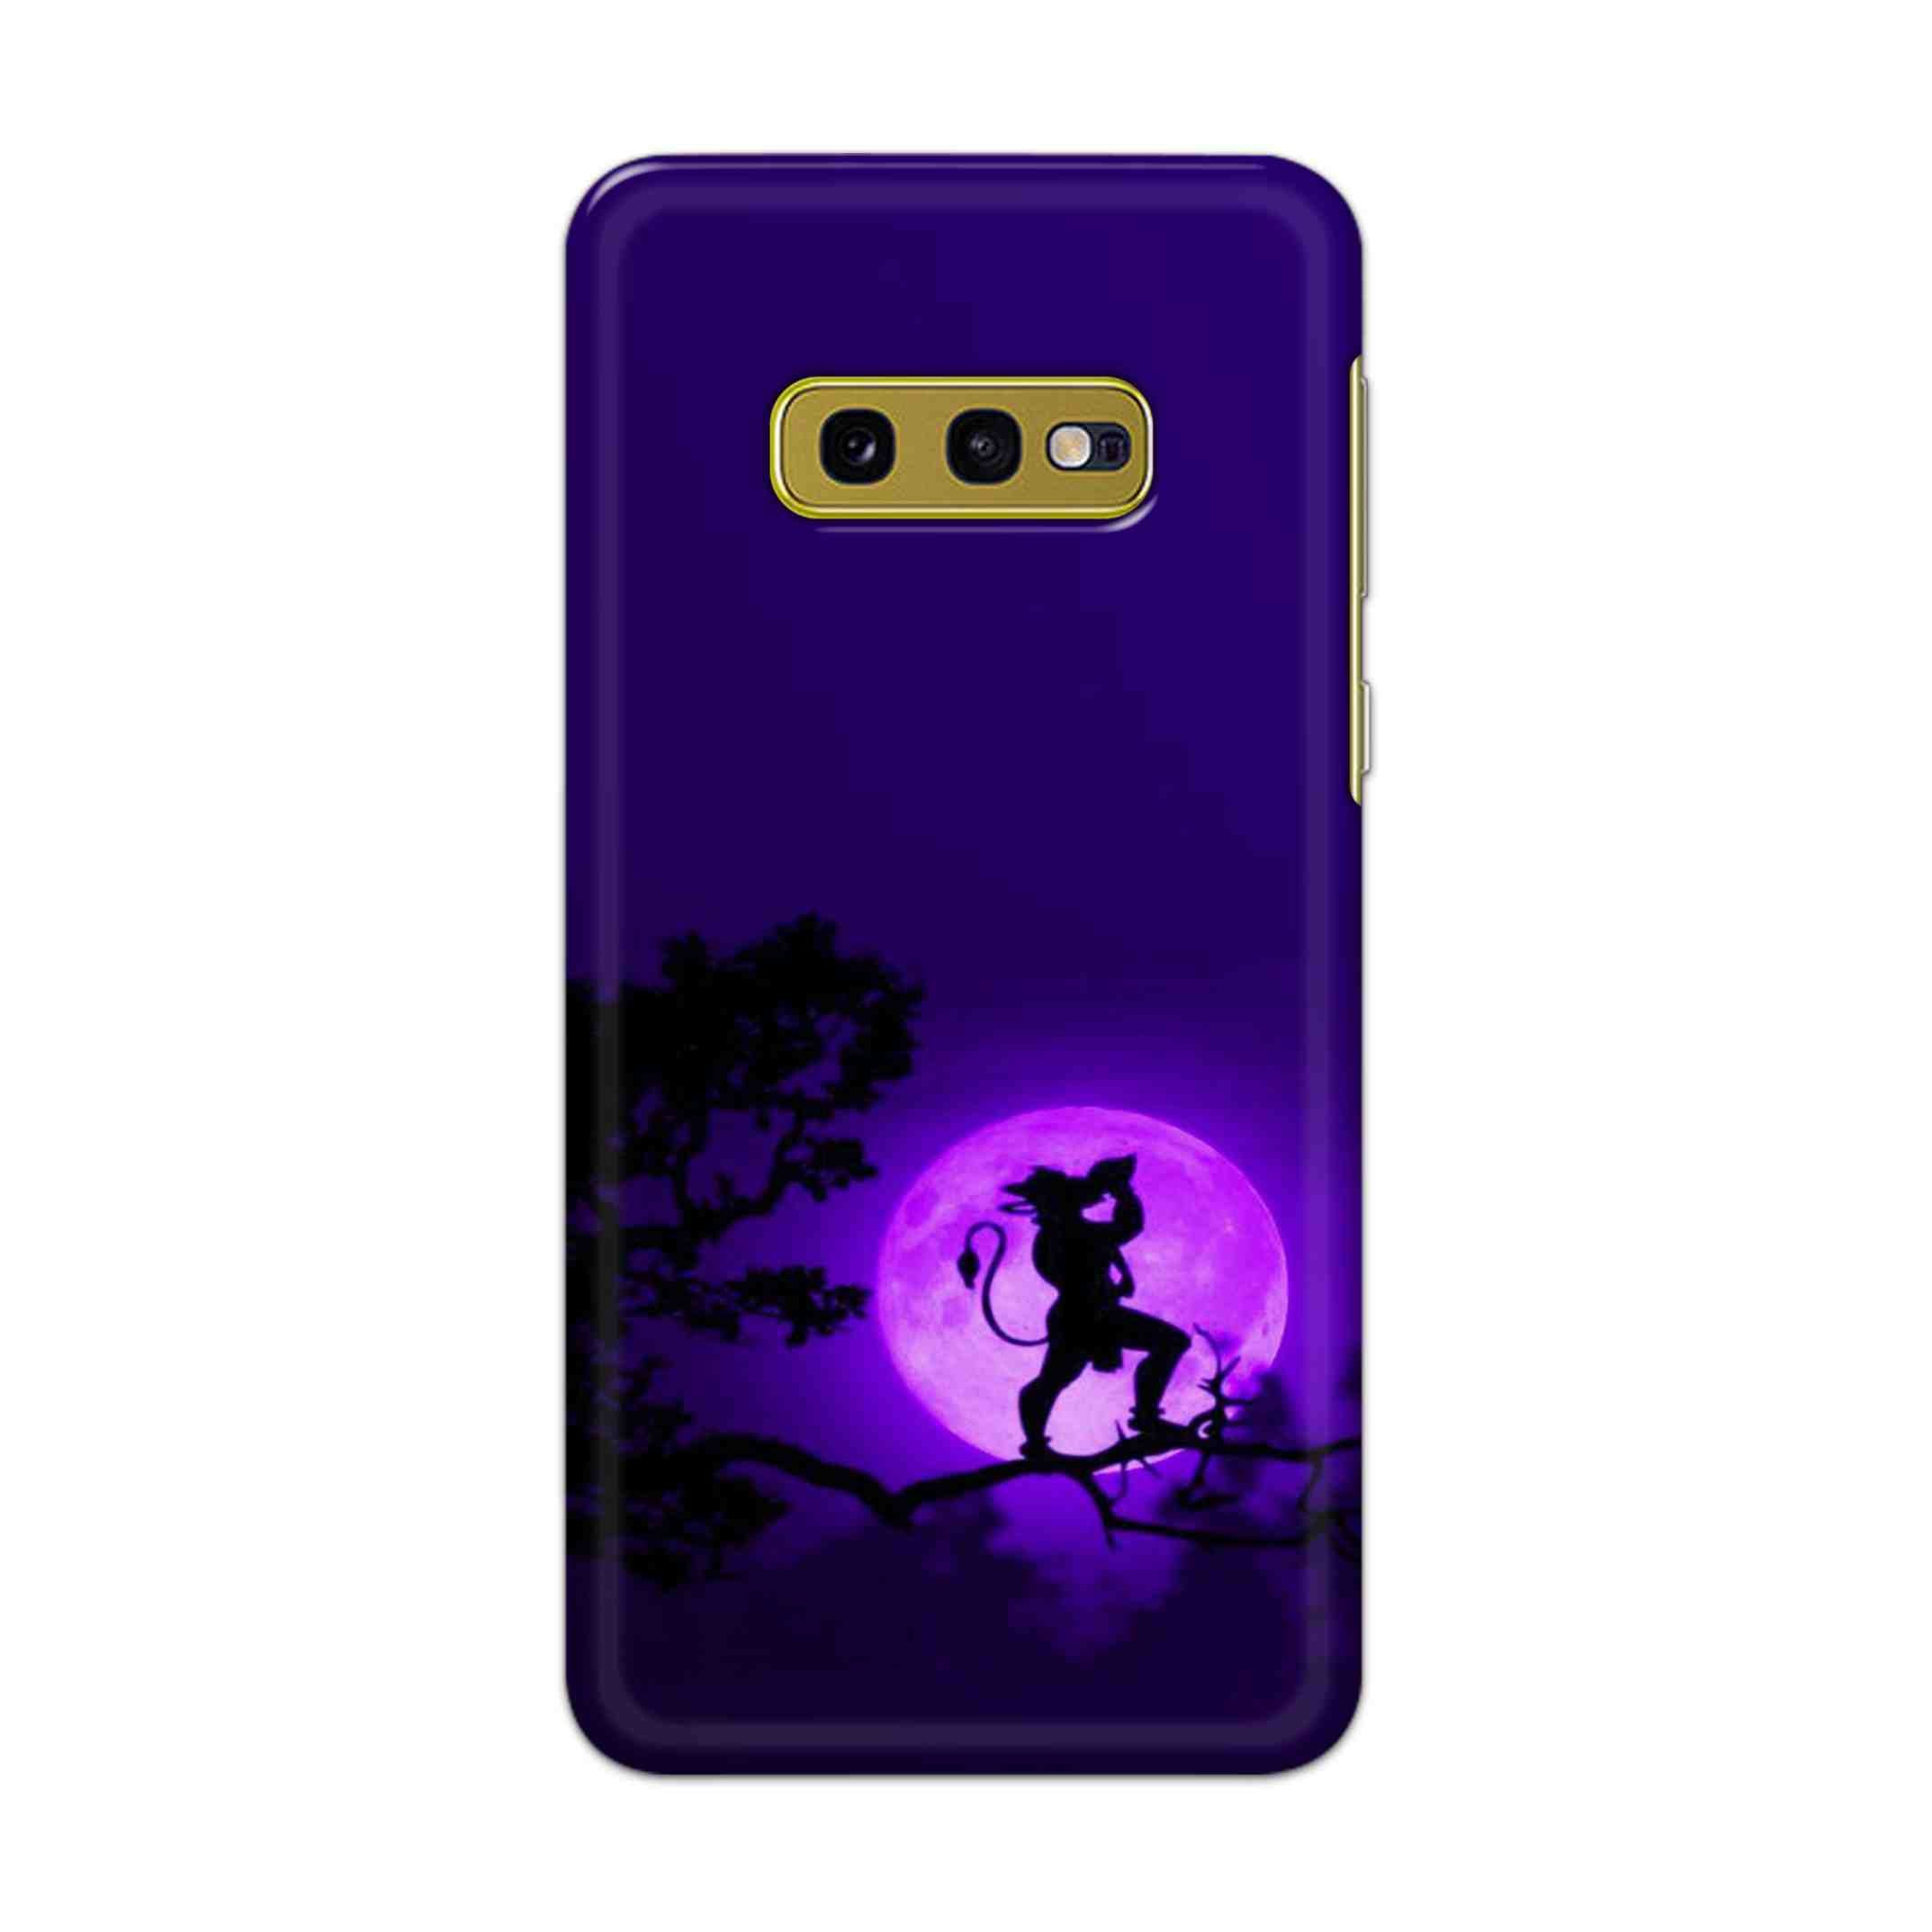 Buy Hanuman Hard Back Mobile Phone Case Cover For Samsung Galaxy S10e Online